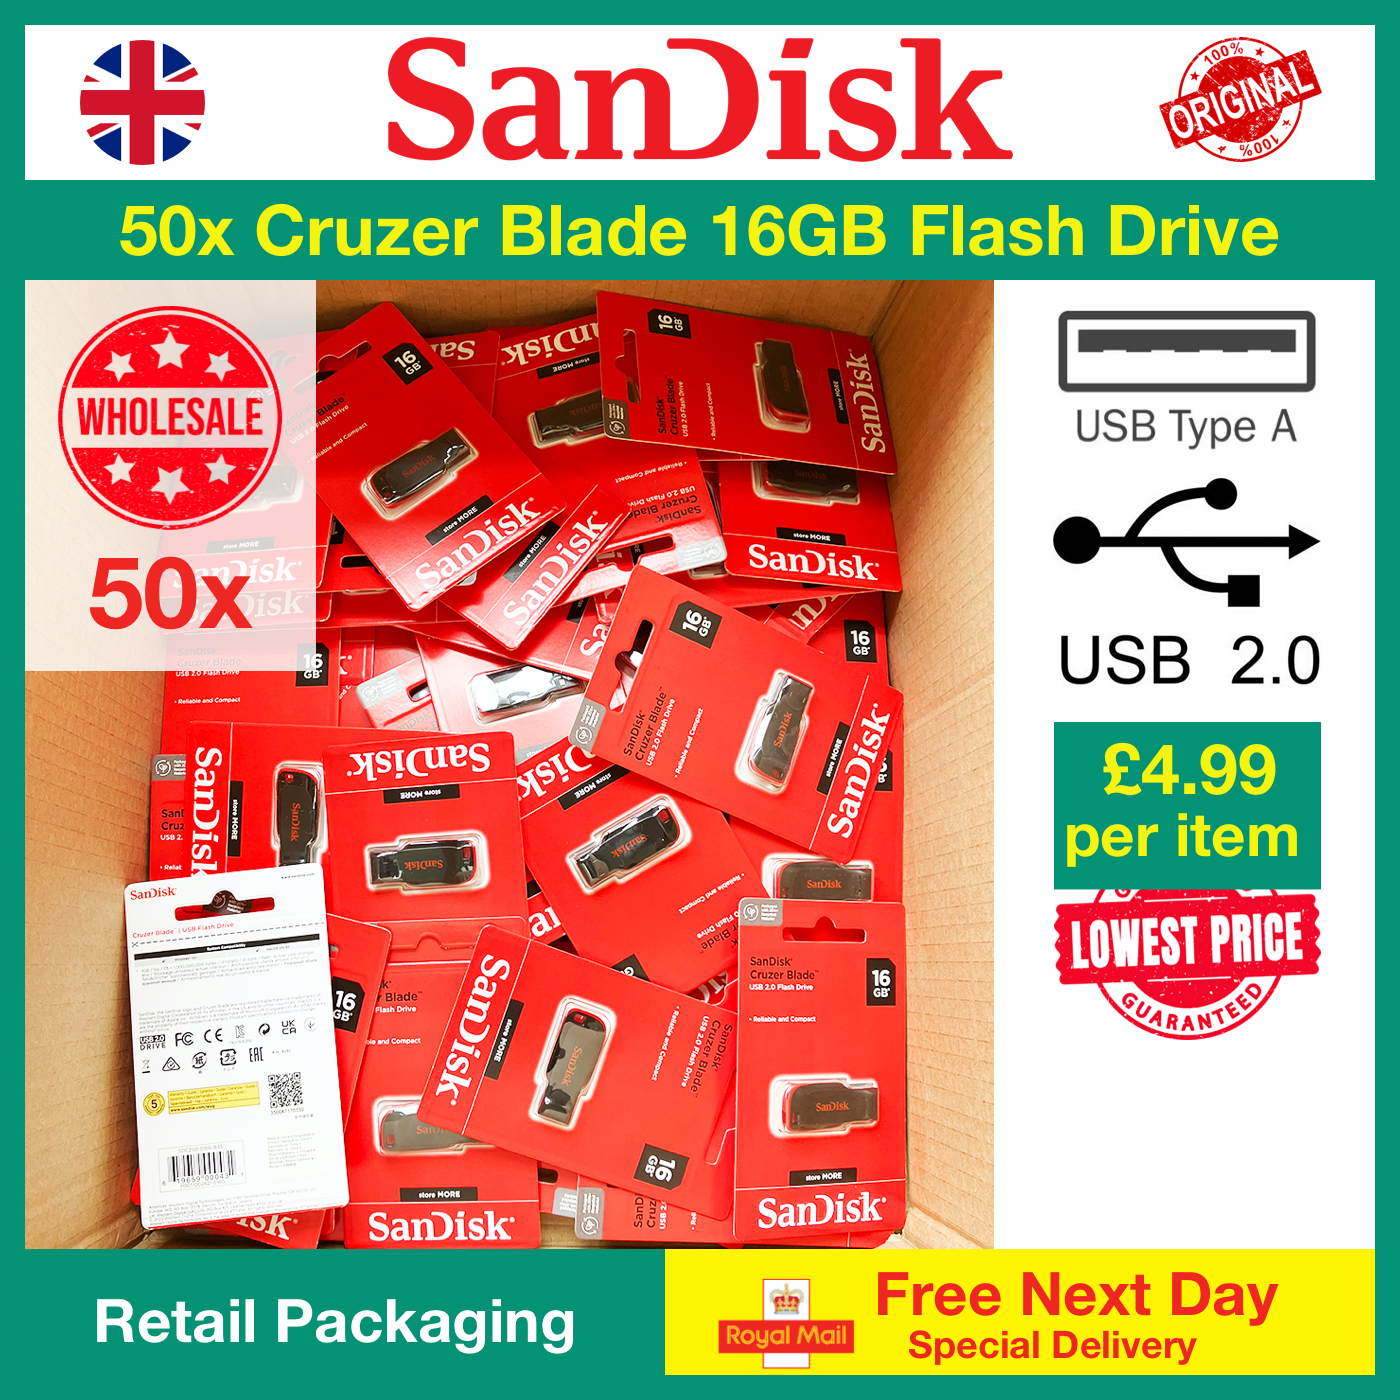 50x SanDisk Cruzer Blade 16GB Flash Drive Wholesale